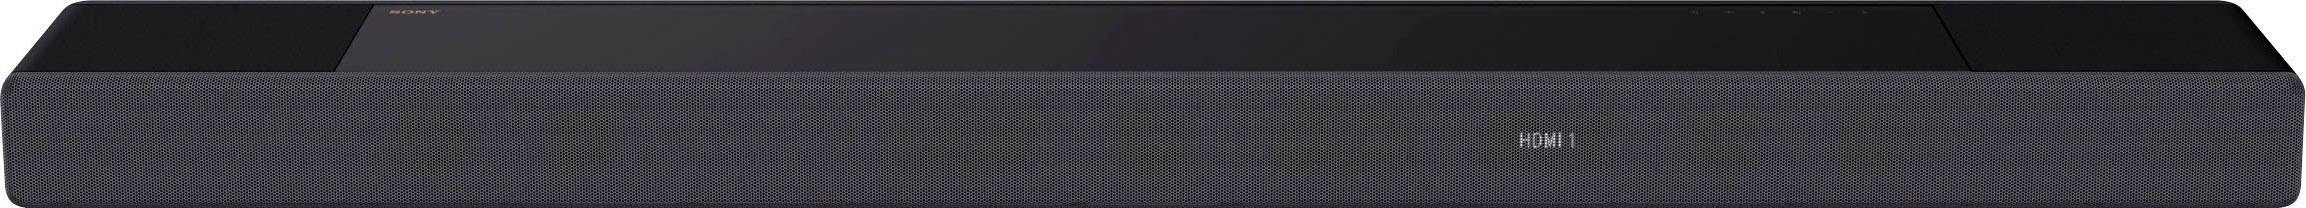 Soundbar Rear-Speaker 7.1.2 HT-A7000 Res Premium High + Atmos, (Dolby SARS3S Sony Soundbar Audio)